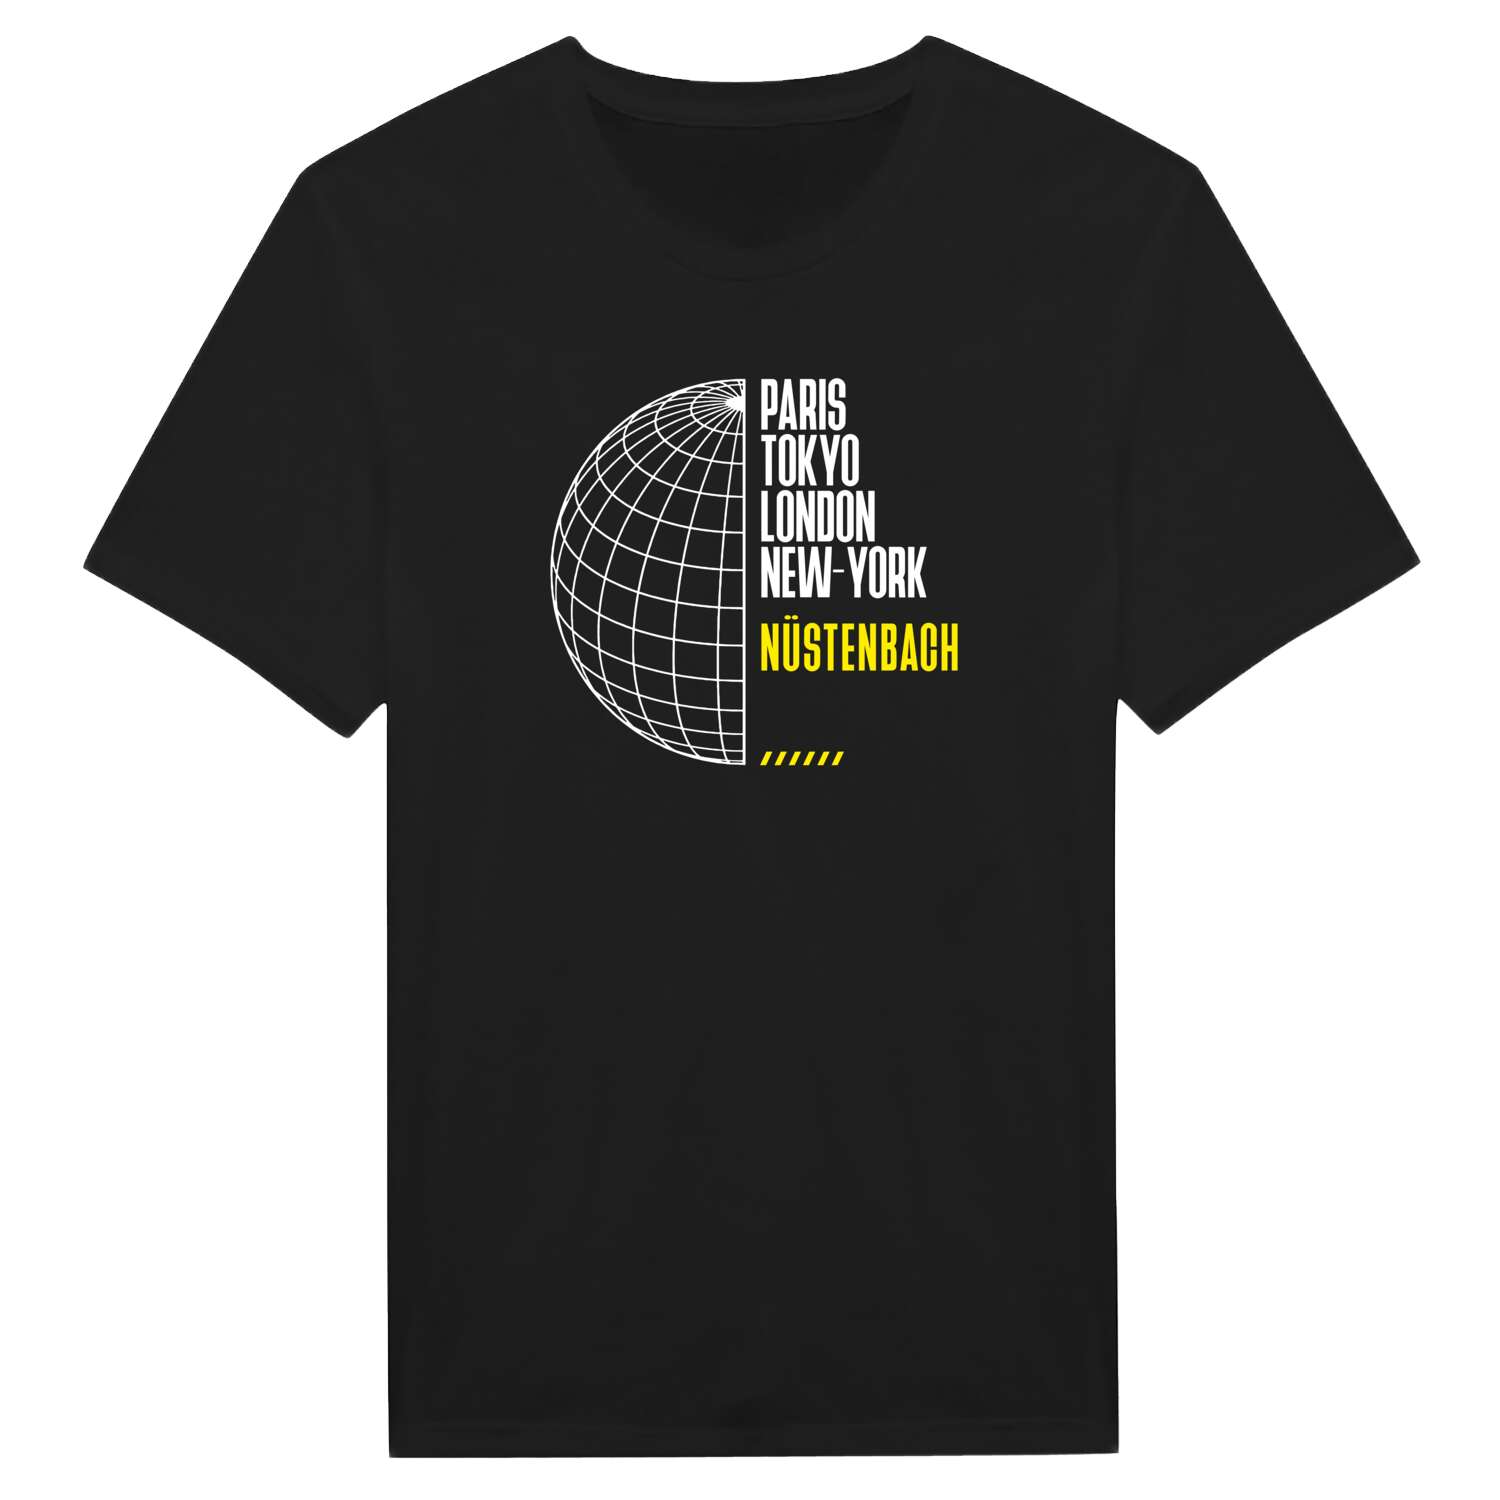 Nüstenbach T-Shirt »Paris Tokyo London«